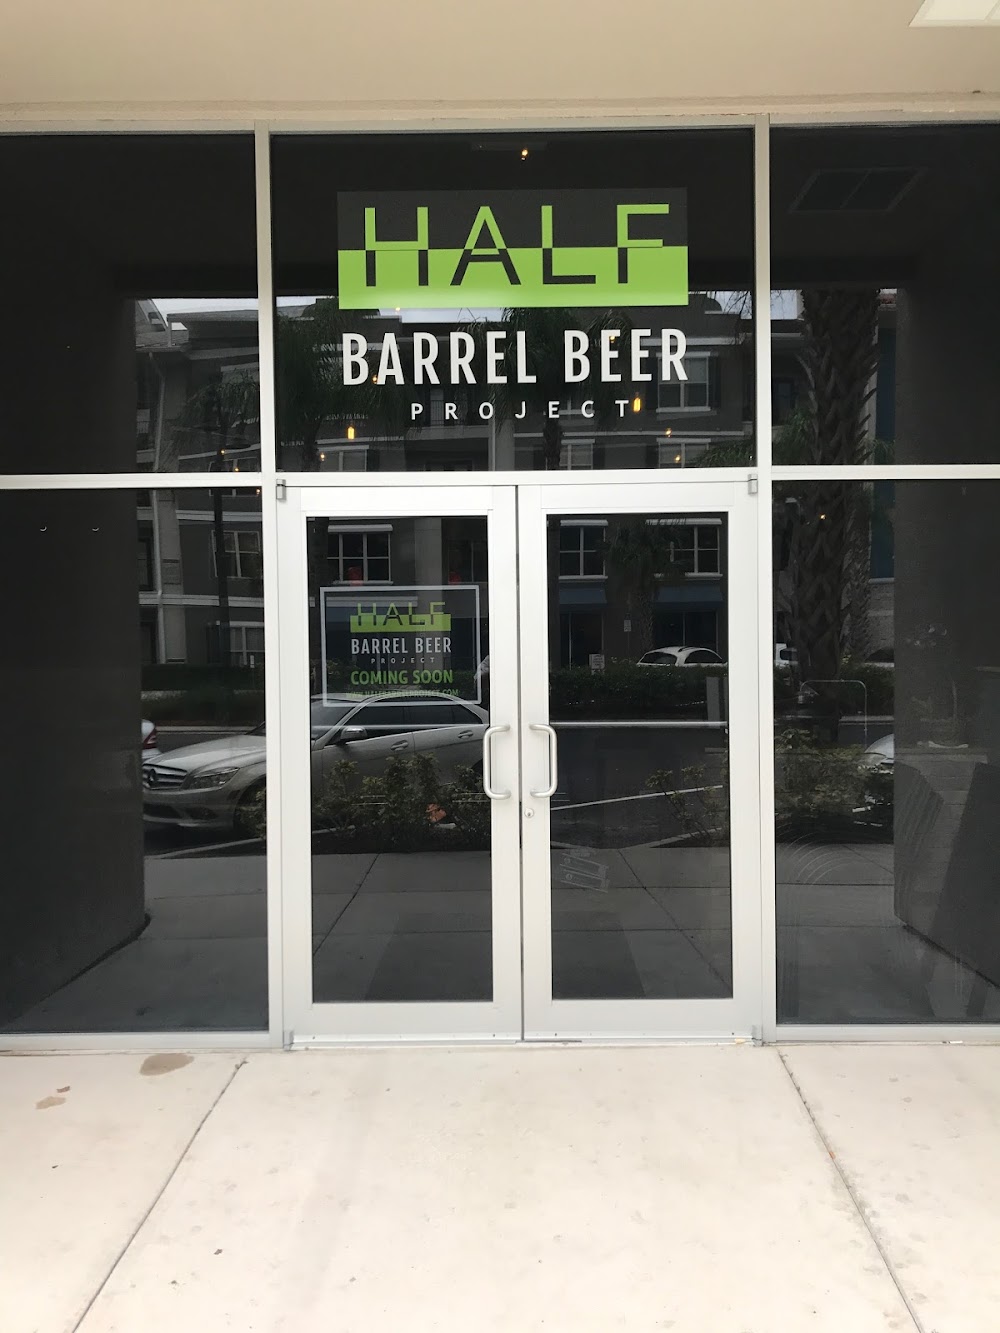 Half Barrel Beer Project